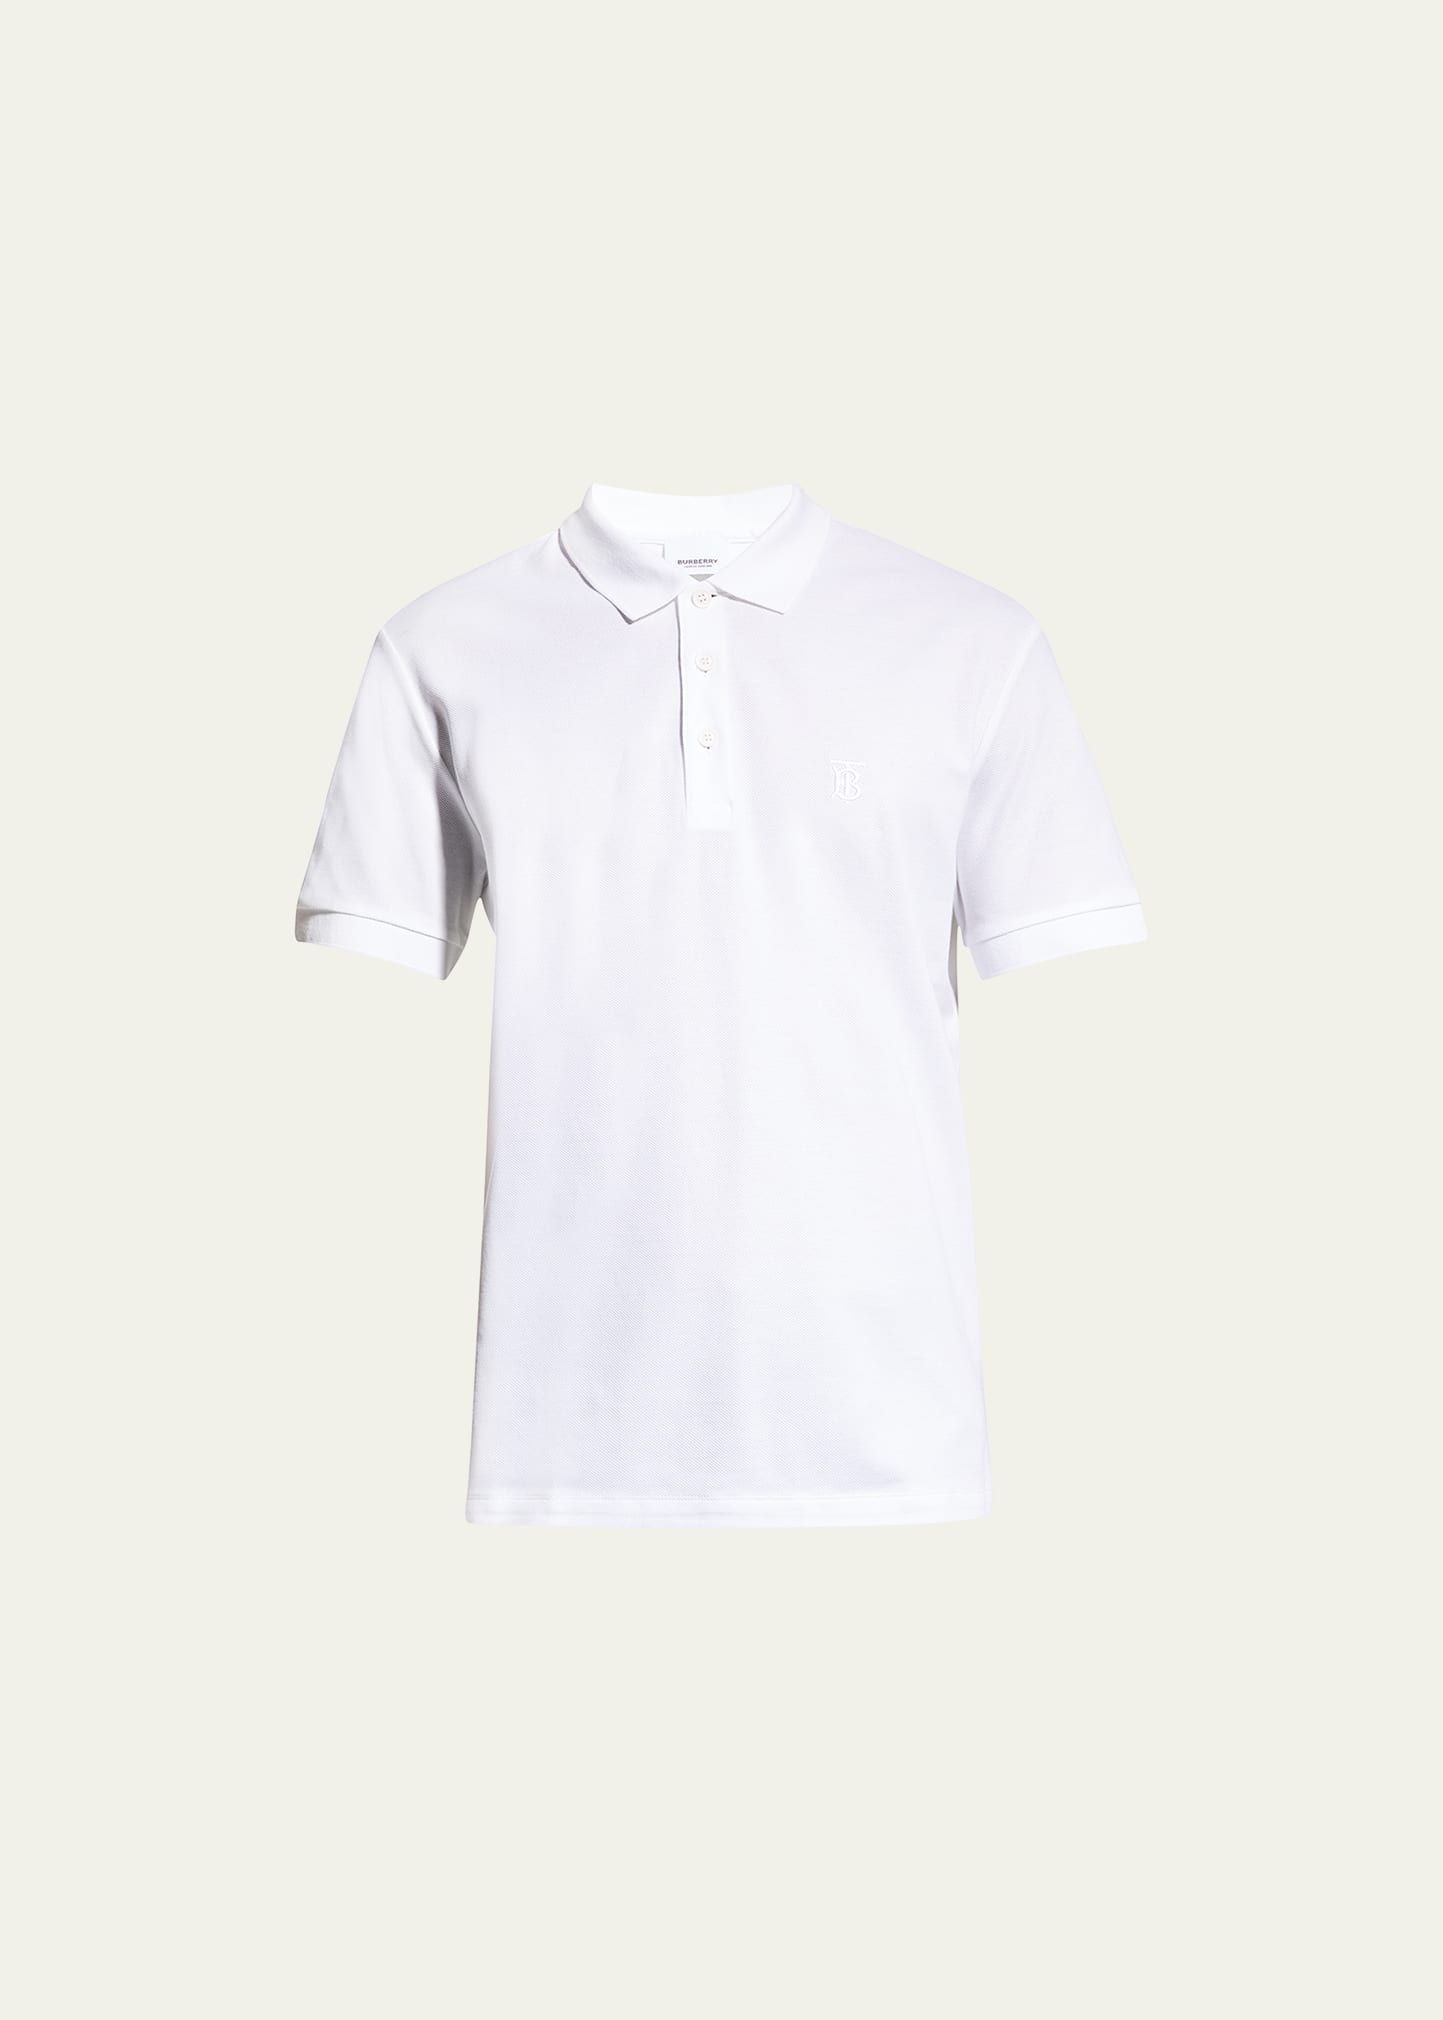 Burberry Men's Eddie Pique Polo Shirt, White - Bergdorf Goodman